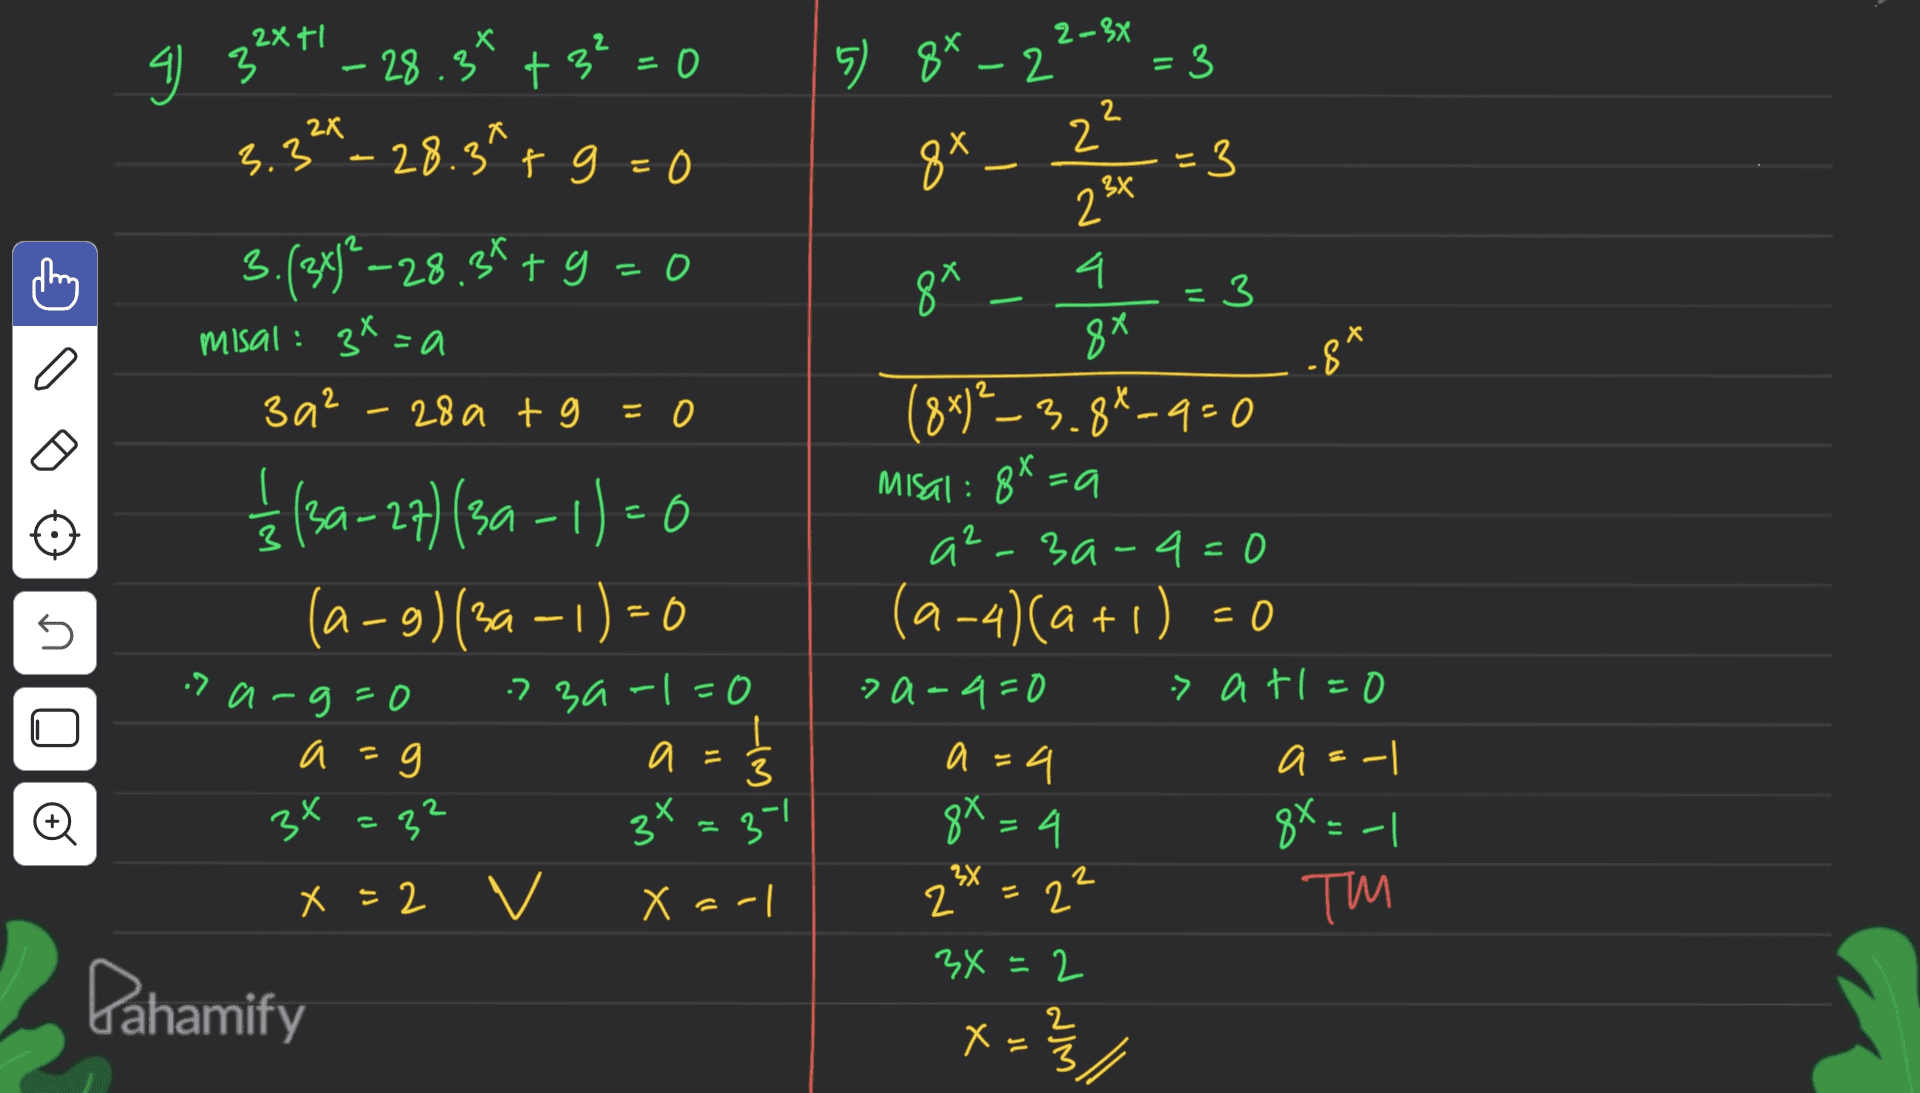 2-3x 43 十? - 0 4) 3²=0 32x+1 -28.34 + 3 - 3.3-28.3tg=0 = 5) 8*-2' = 3 2 2X a 8x - 2 23* -3 3.(2x)” –28.38 + 9 = 0 4. 8* 8 11 3 - 8x х misal: 3*=a 3a² 28a te=0 2 14(3a-27) (30-11.0 (a-g)(34 – 1) = 0 = U -S (8+)²_3.8*-q=0 Misal : 8*=a a2-3a-q=0 (a-4)(a +1) = 0 » a-a=0 > atl=0 as- 8* = 4 4 2 TM 3x = 2 ? arg=0 a= 730-1=0 a E Ś 3 a=4 X 2 U o 3x 32 3* =37 8X 8X=-| 2 2 X =2 v xa-1 3X 2 Il Dahamify کم نم ملح 2 x = 